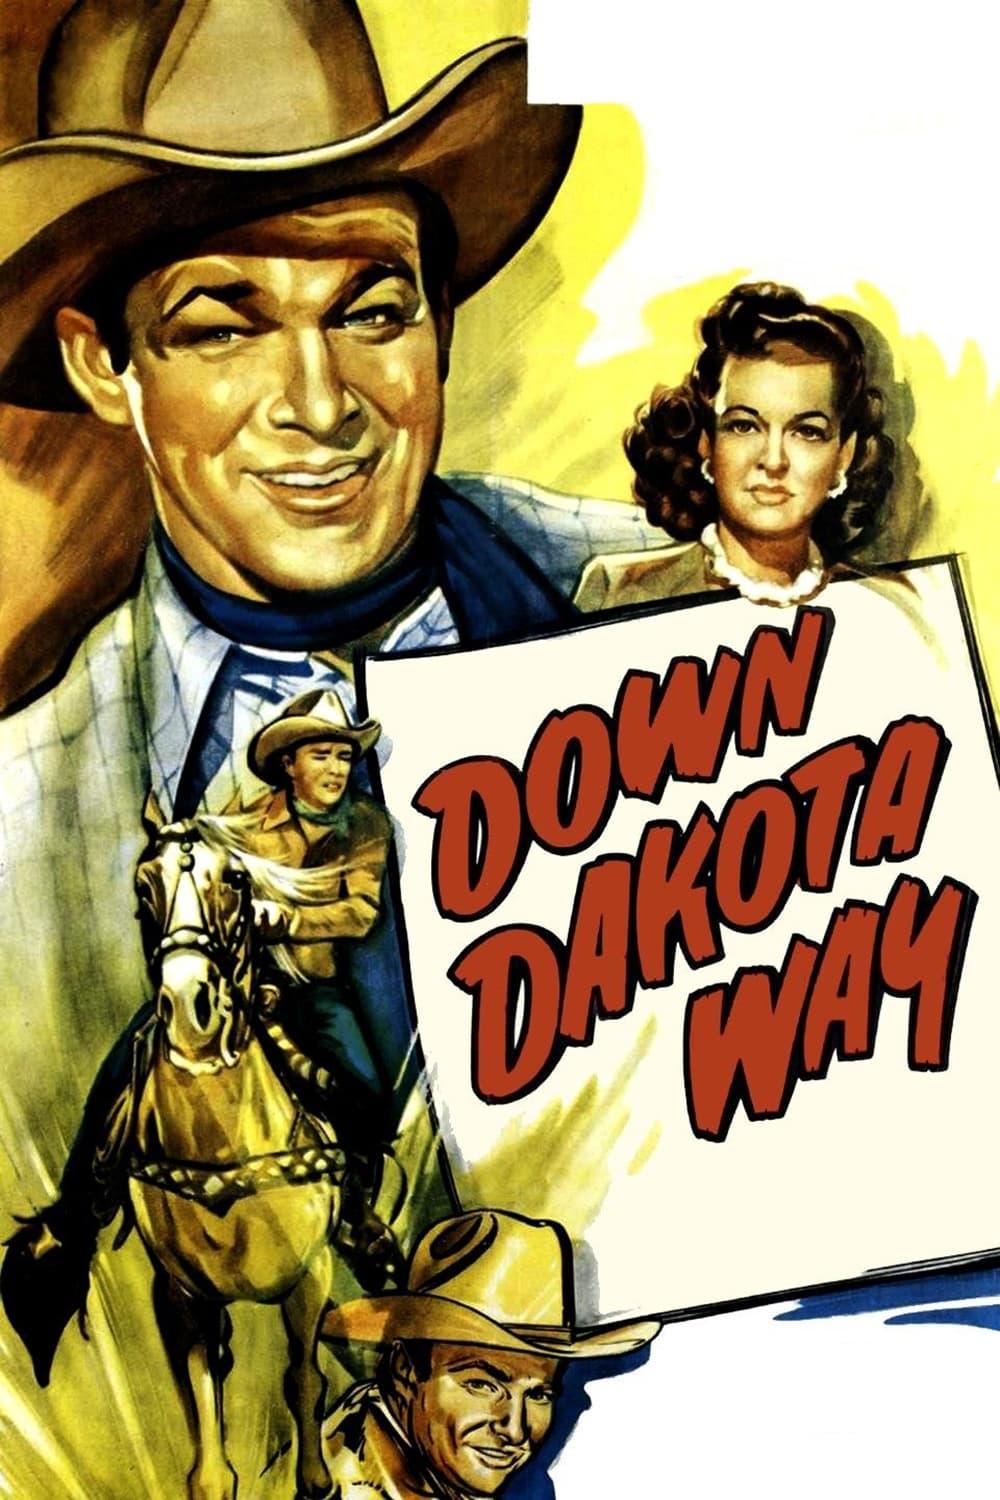 Down Dakota Way poster